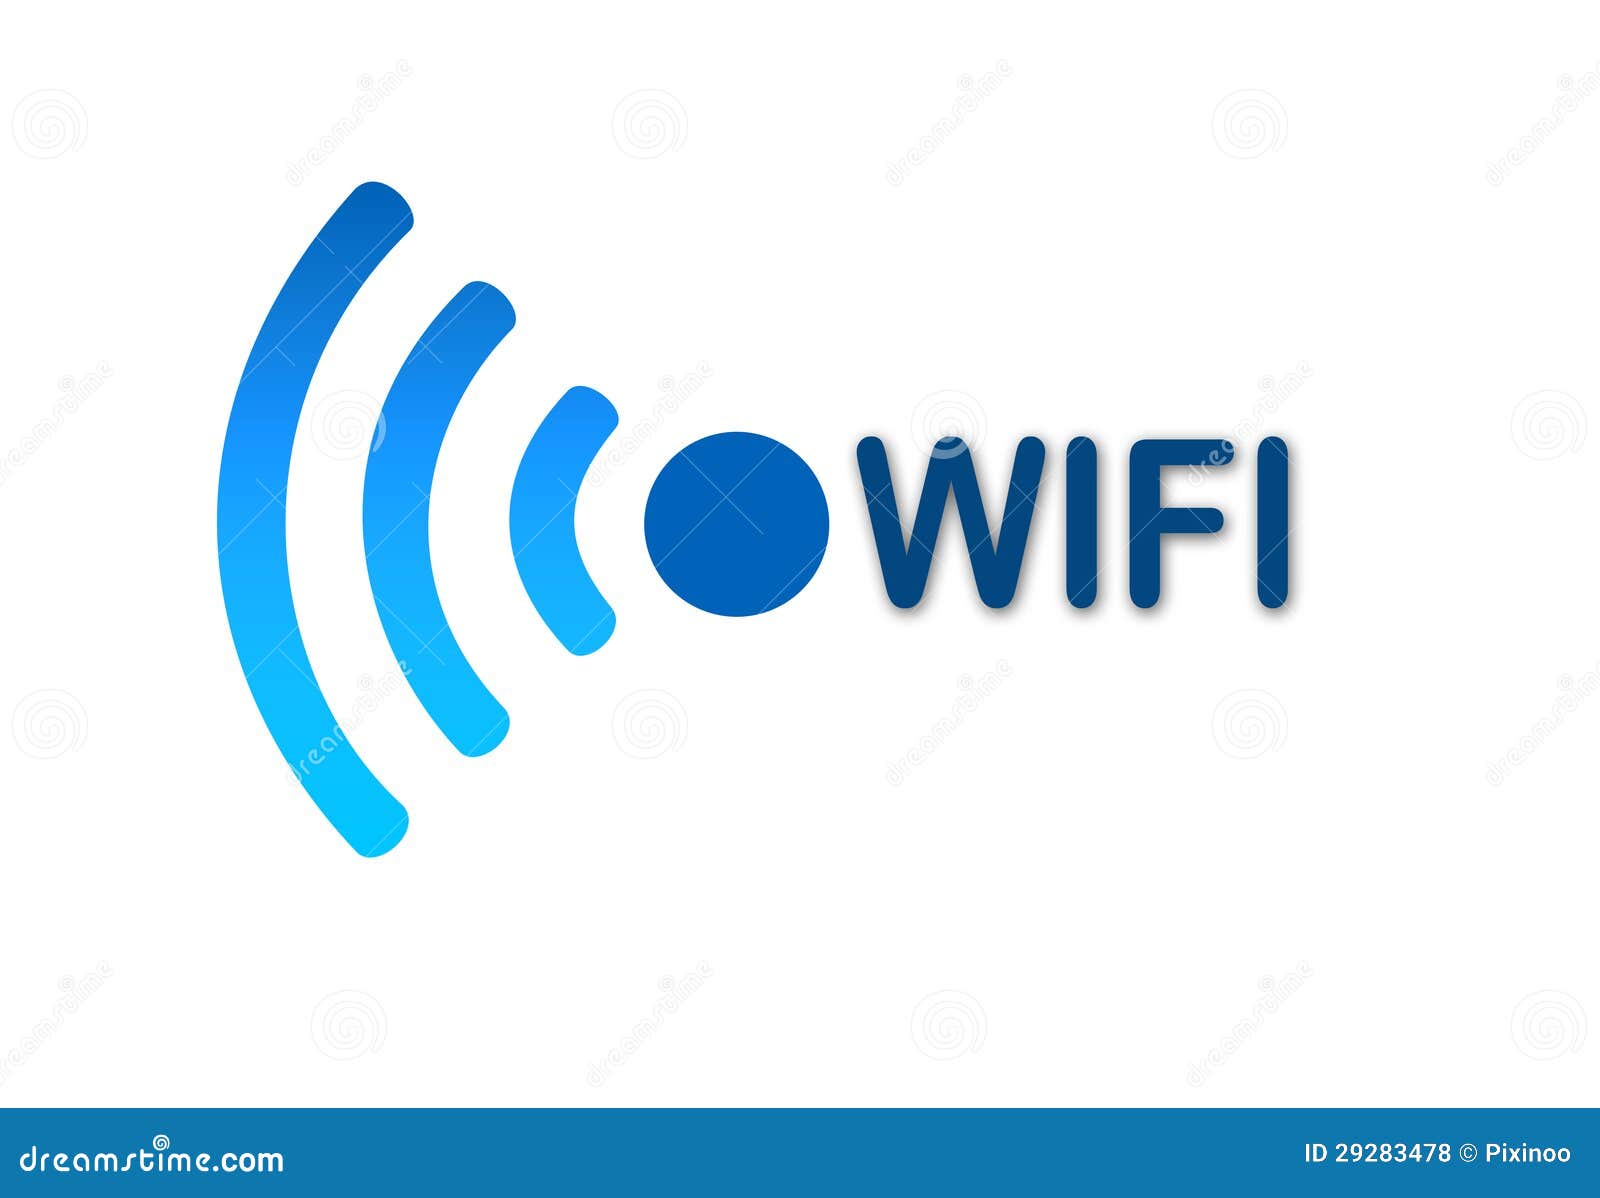 Wireless Wifi Network Blue Icon Royalty Free Stock Photos  Image 